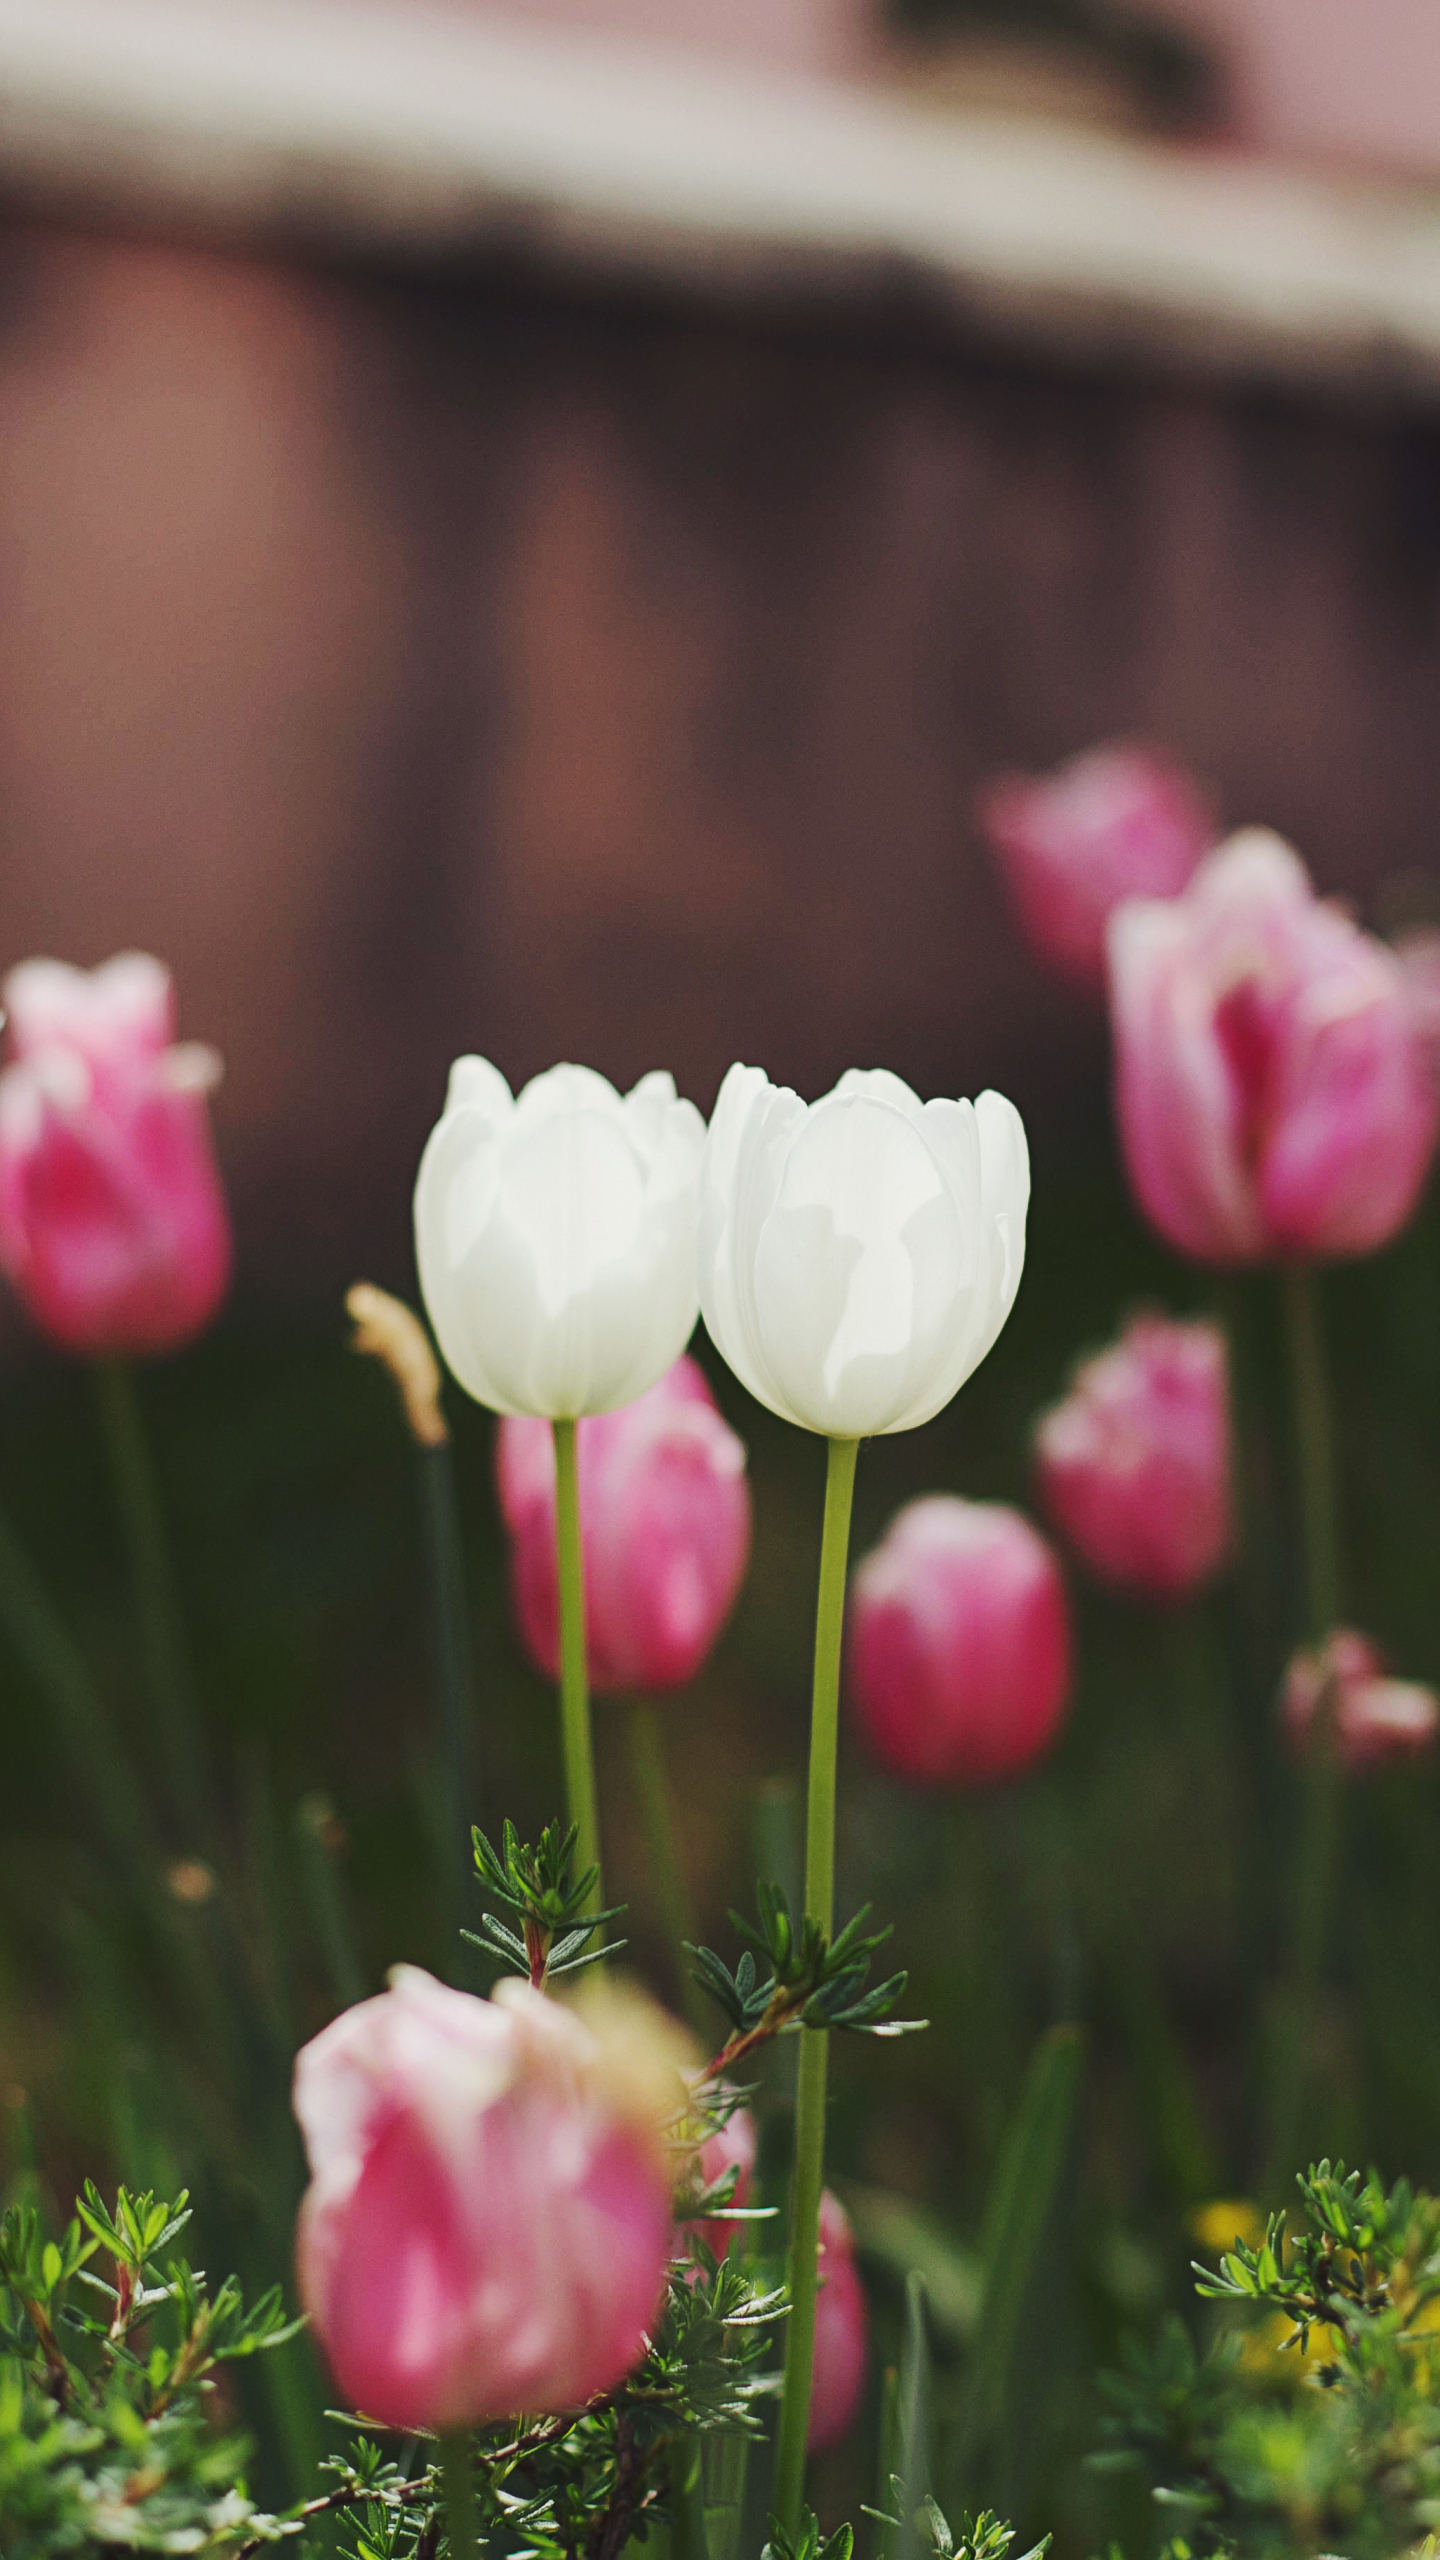 1131921 descargar imagen tierra/naturaleza, tulipán, naturaleza, flor, flor rosa, difuminar, difuminado, flor blanca, flores: fondos de pantalla y protectores de pantalla gratis